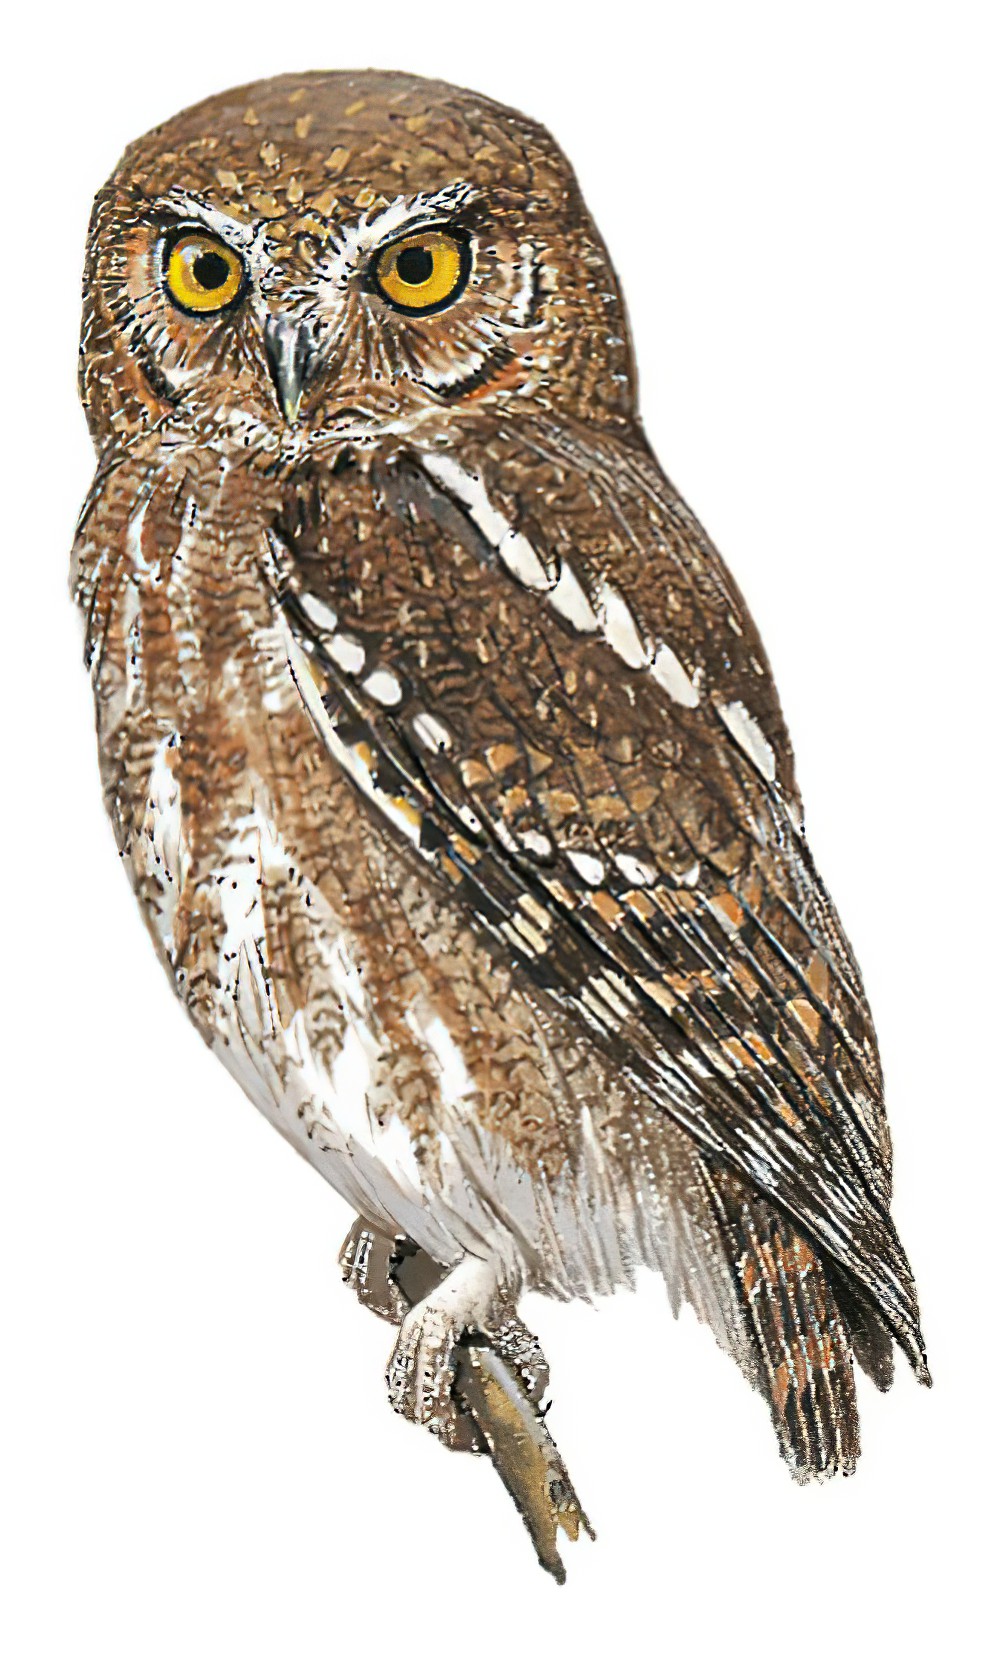 Elf Owl / Micrathene whitneyi